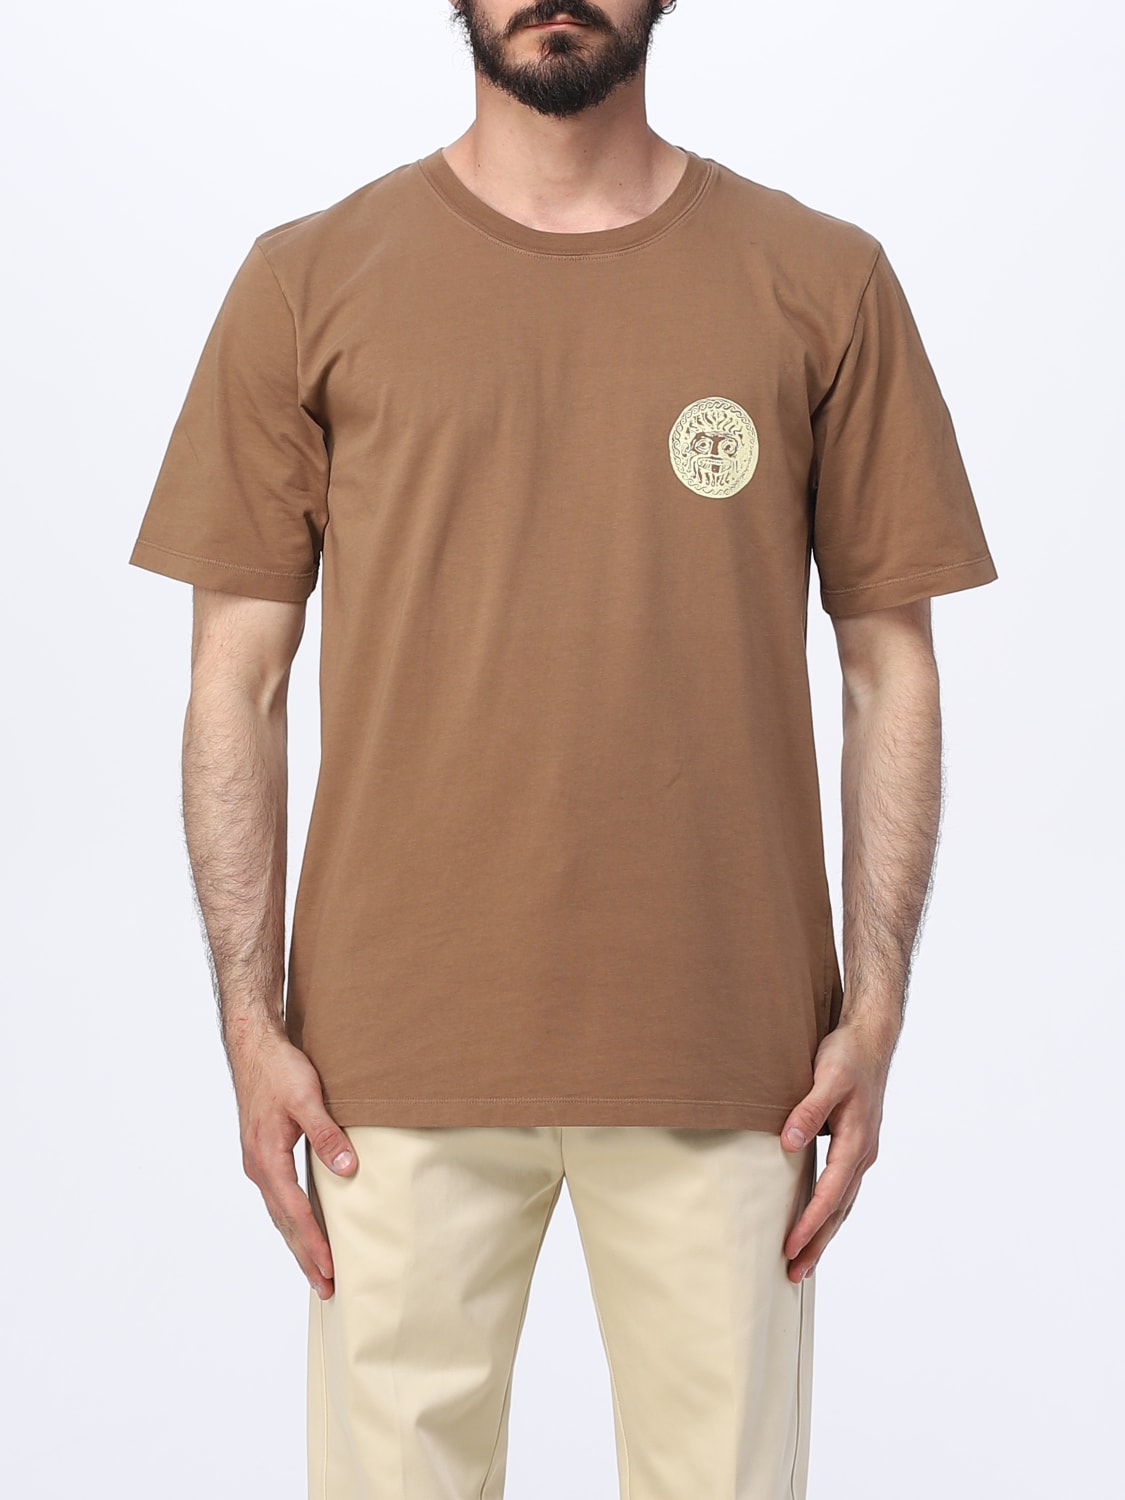 PAURA: t-shirt for man - Brown | Paura 09DP10010101725 online GIGLIO.COM